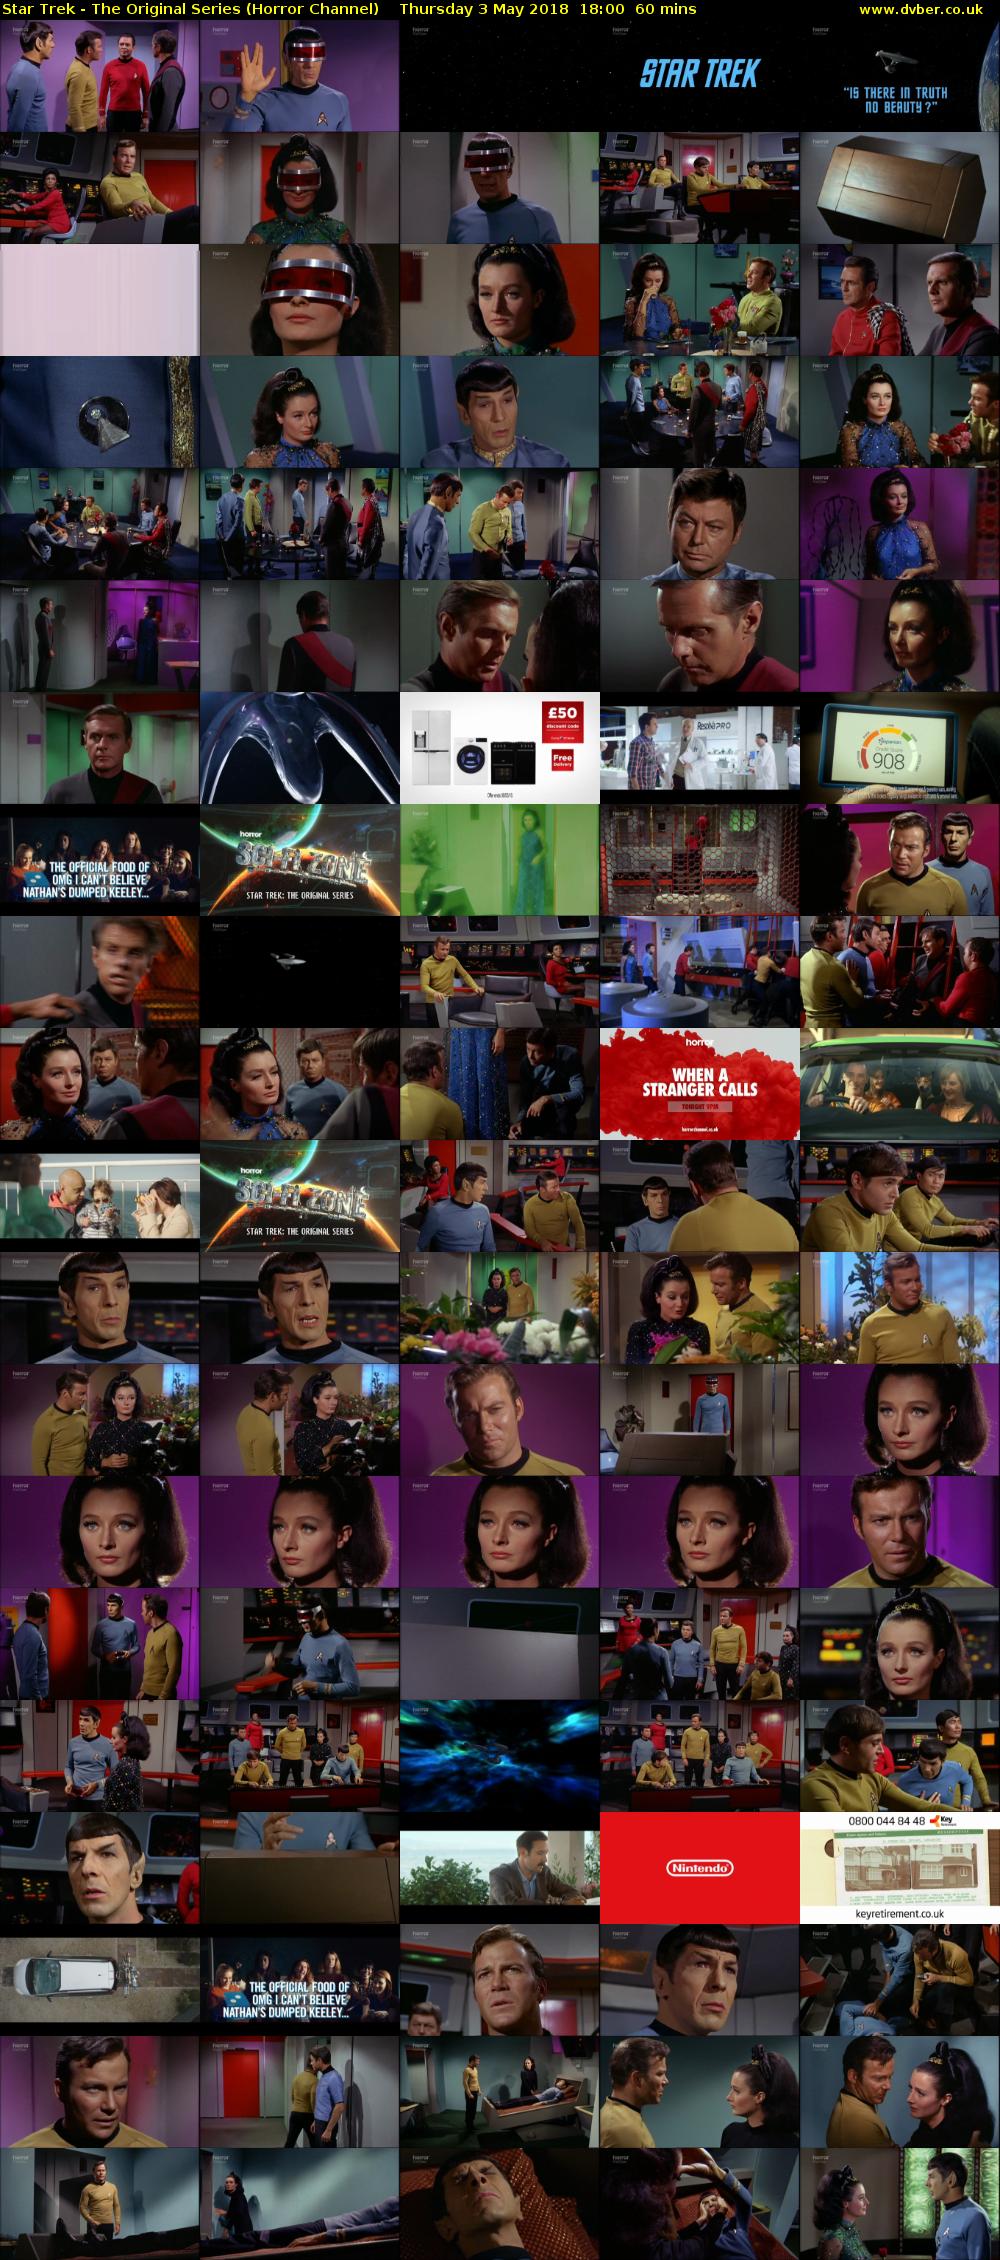 Star Trek - The Original Series (Horror Channel) Thursday 3 May 2018 18:00 - 19:00